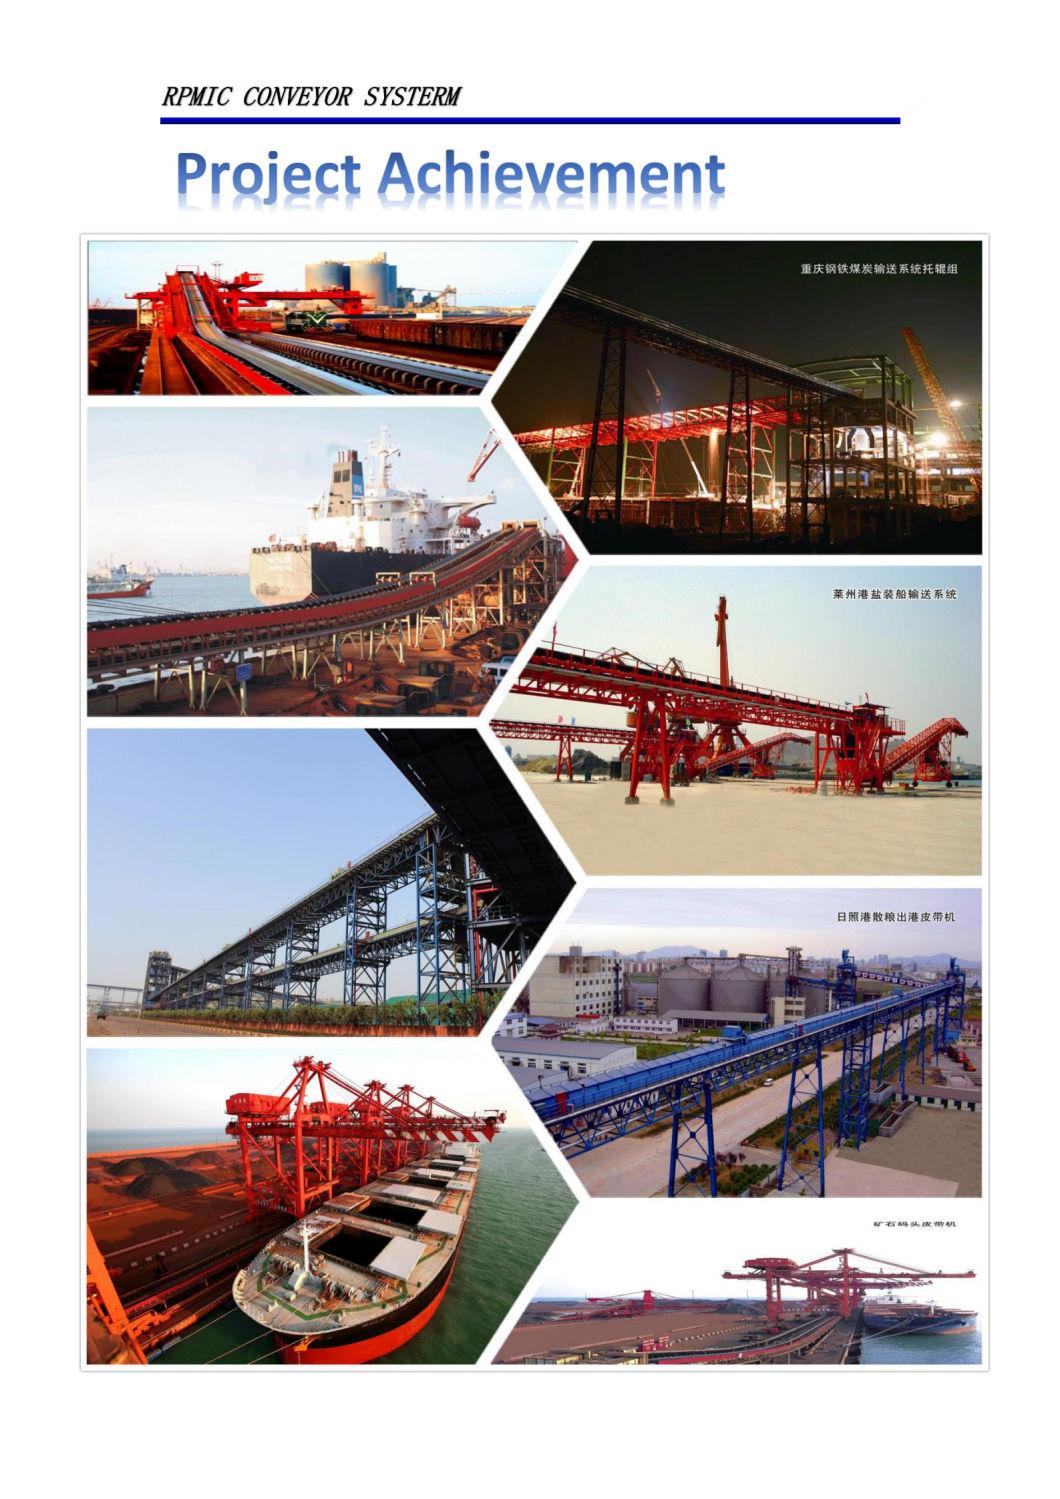 JIS Standard Conveyor Idler for Port, Cement, Power Plant Industries